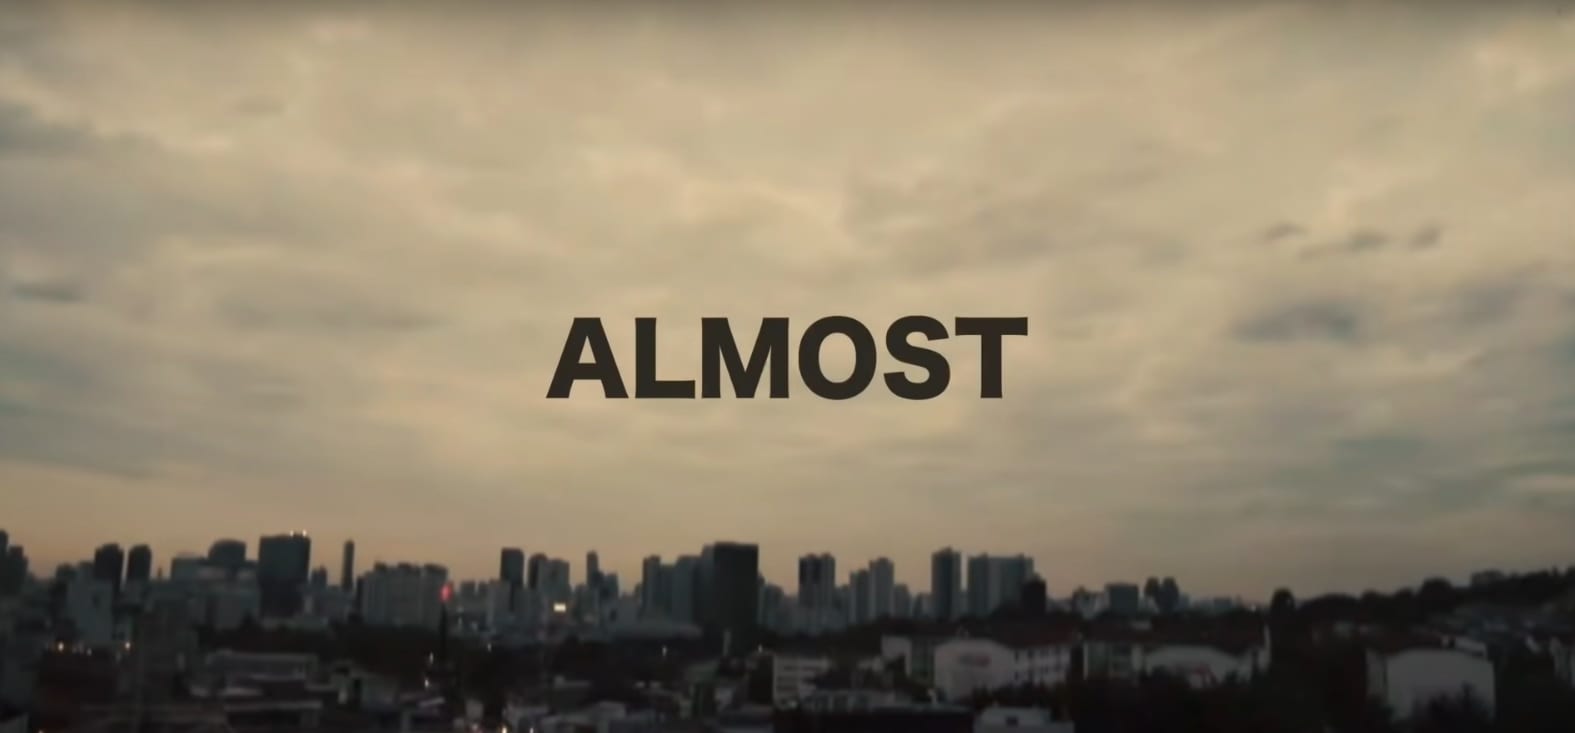 Koncept - Almost (MV screenshot)